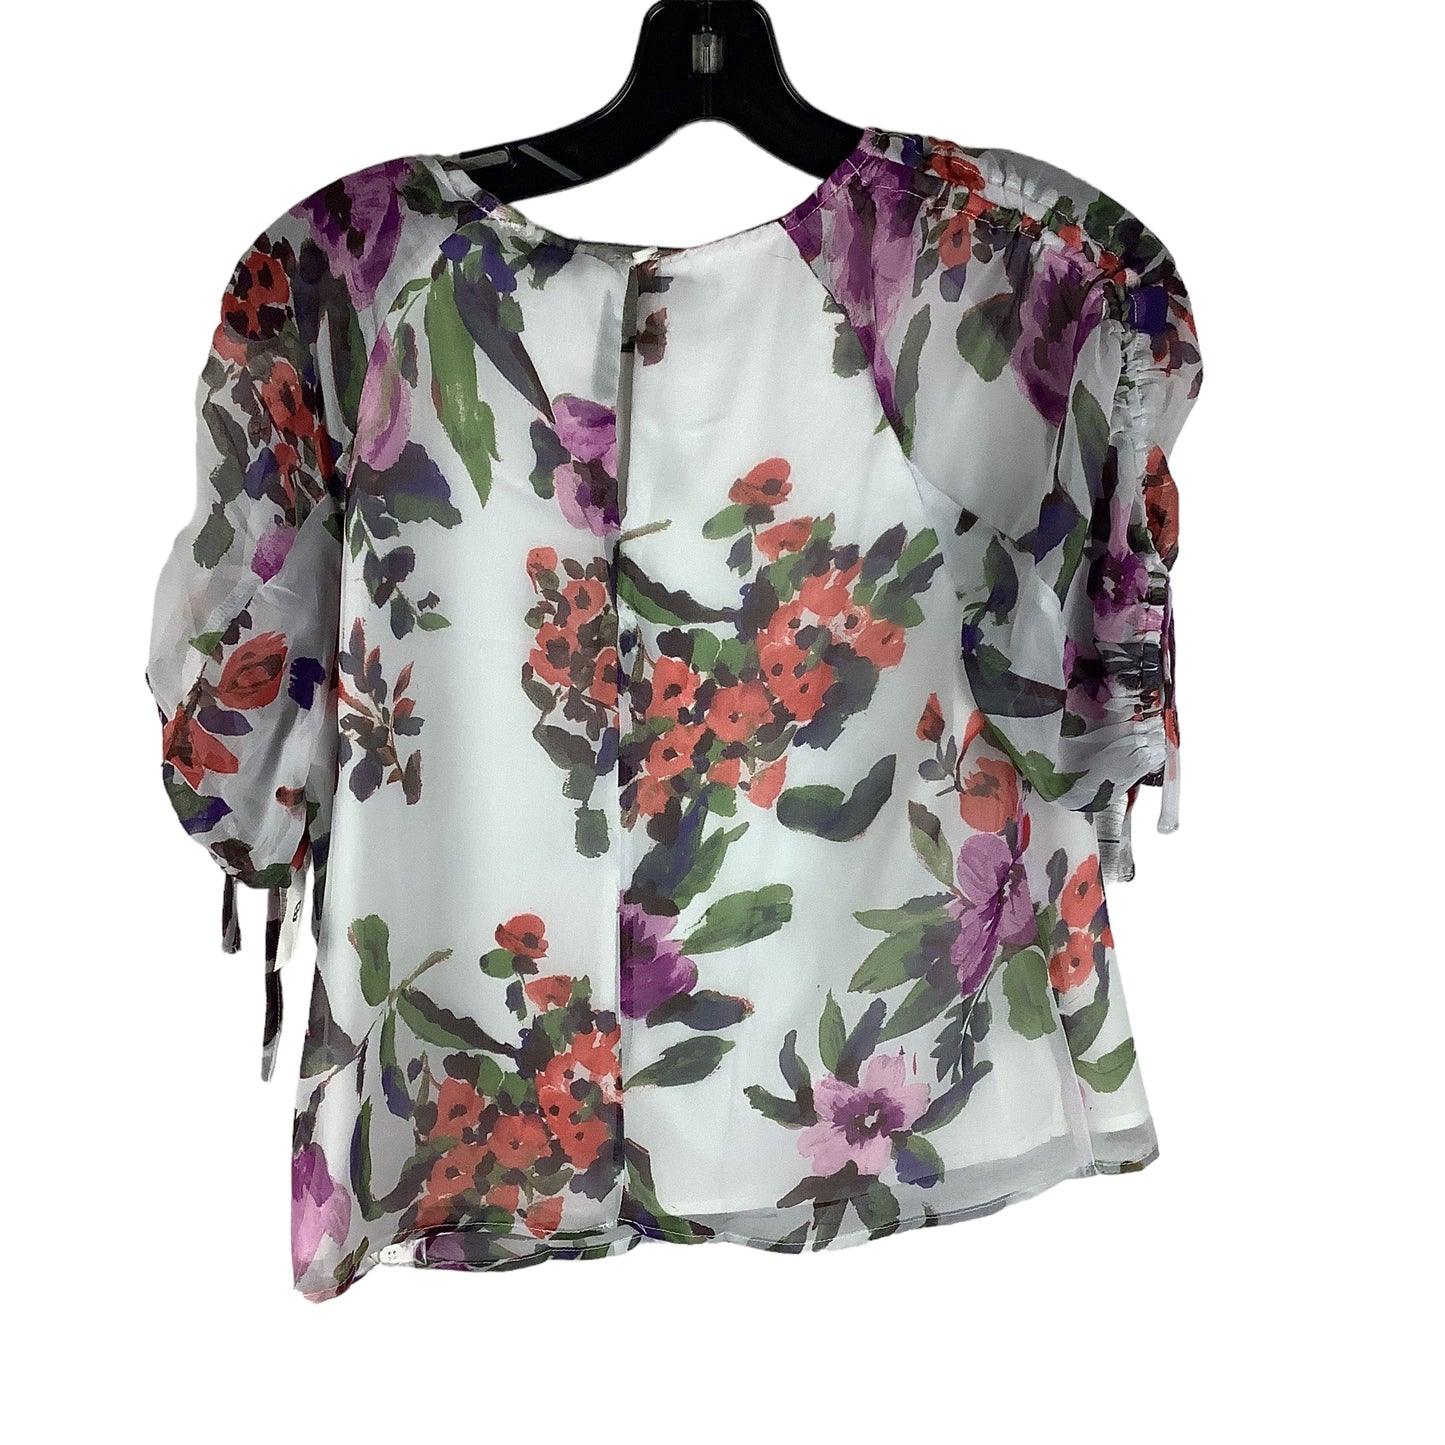 Floral Print Top Short Sleeve Lulus, Size Xs